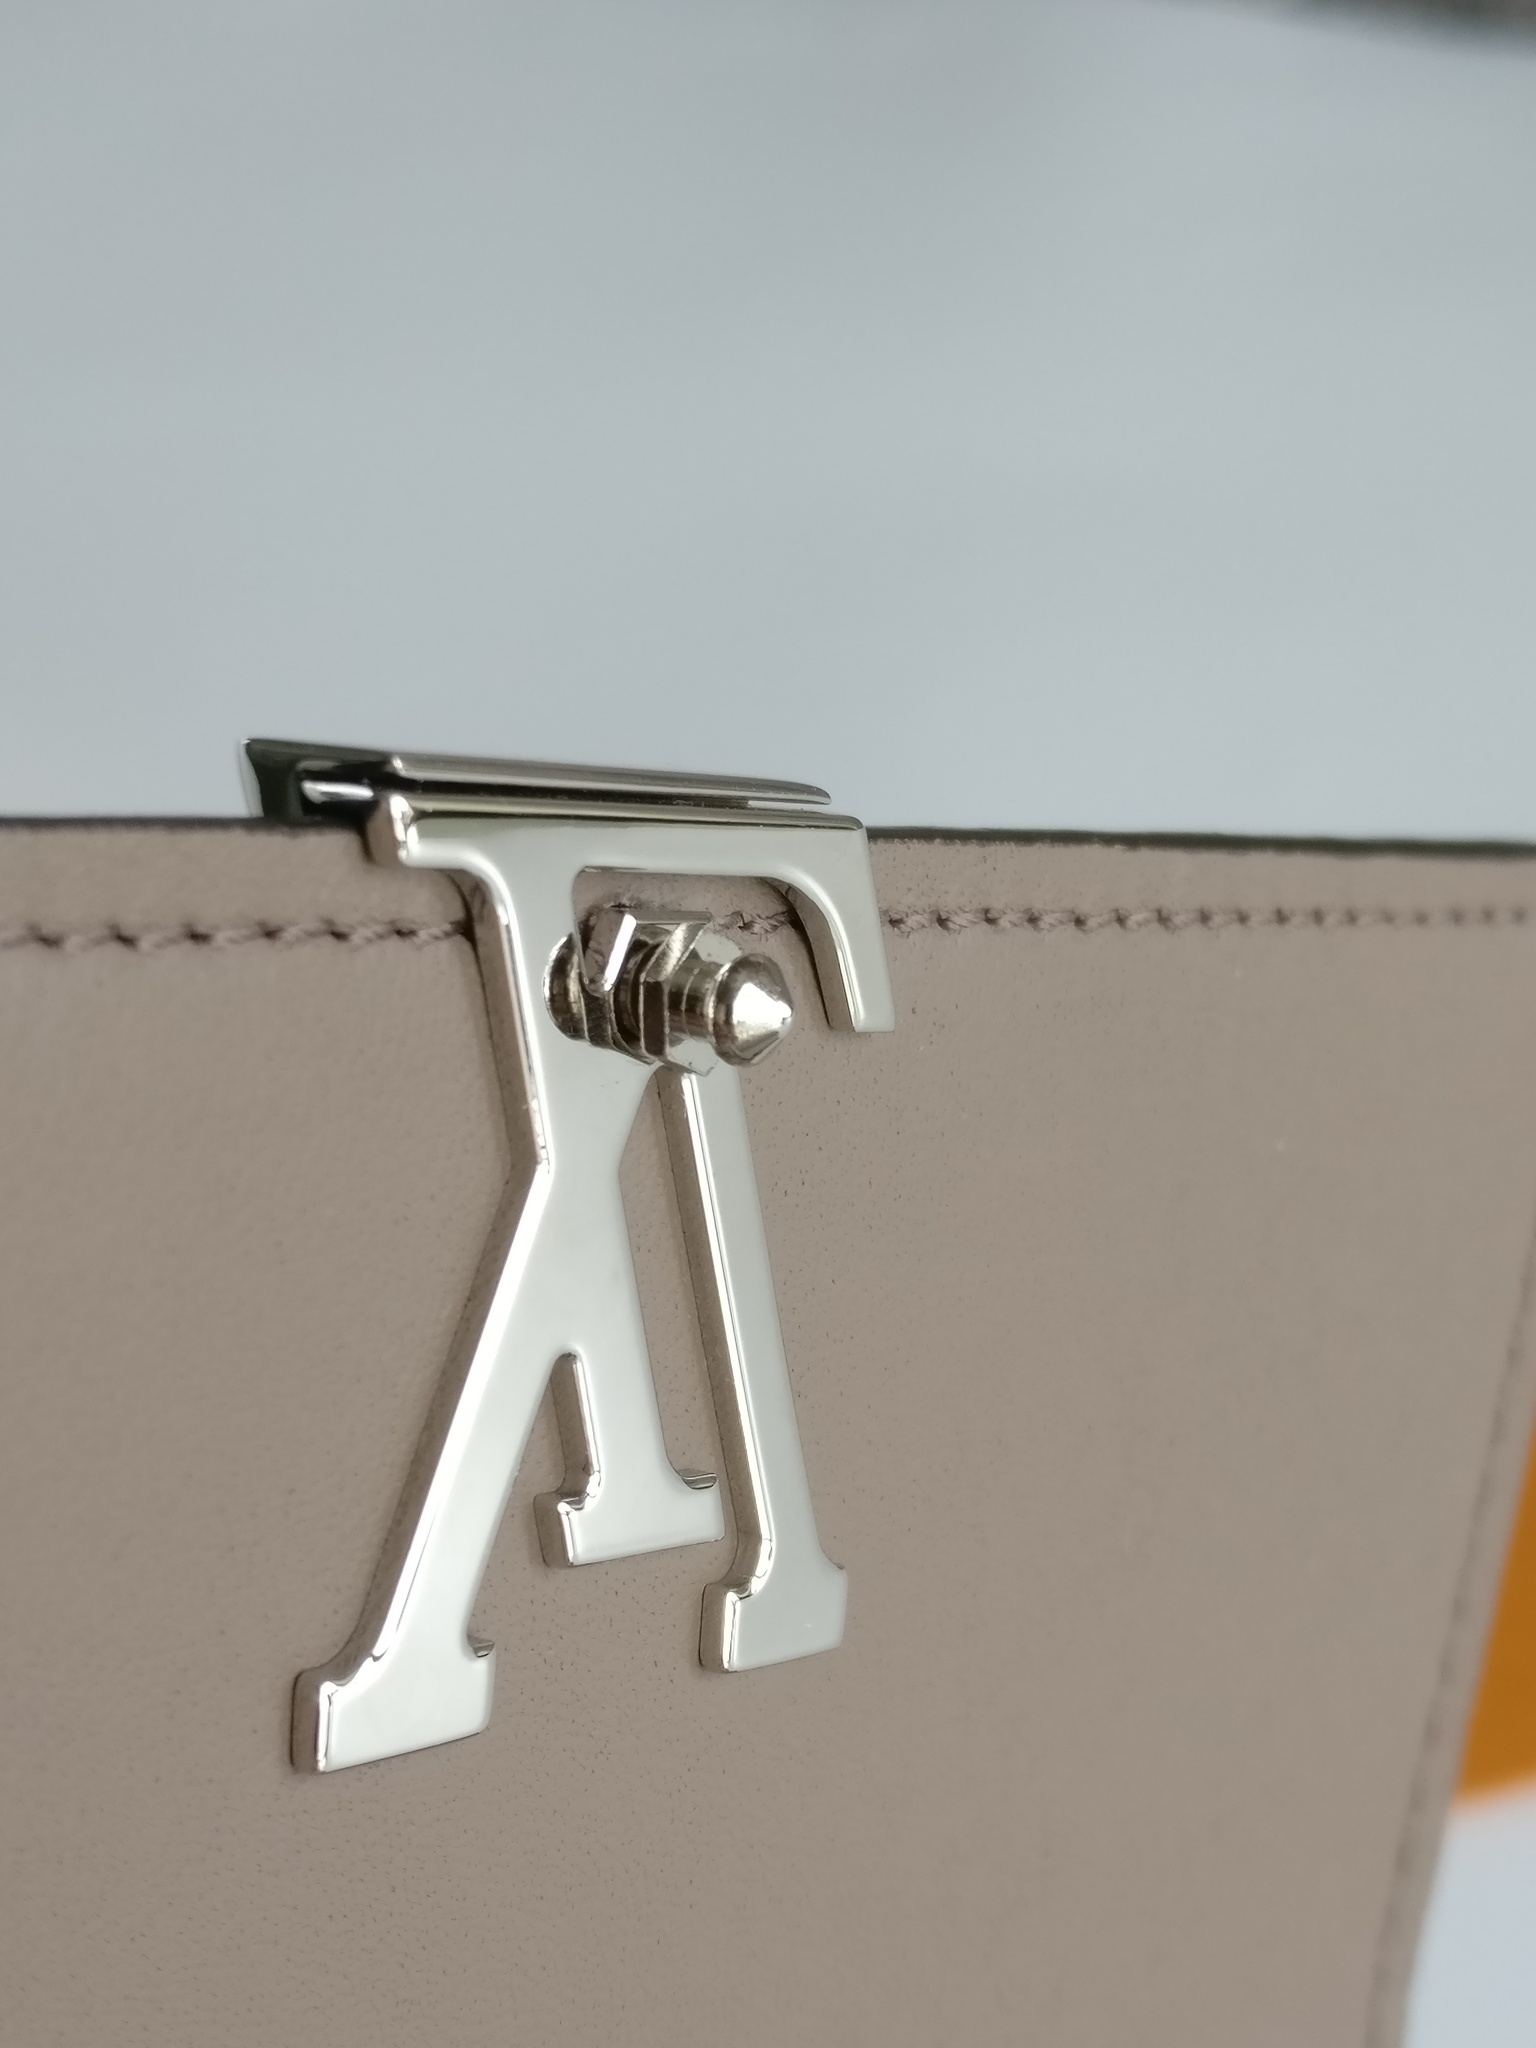 Louis Vuitton Capucines Compact Wallet magnolia